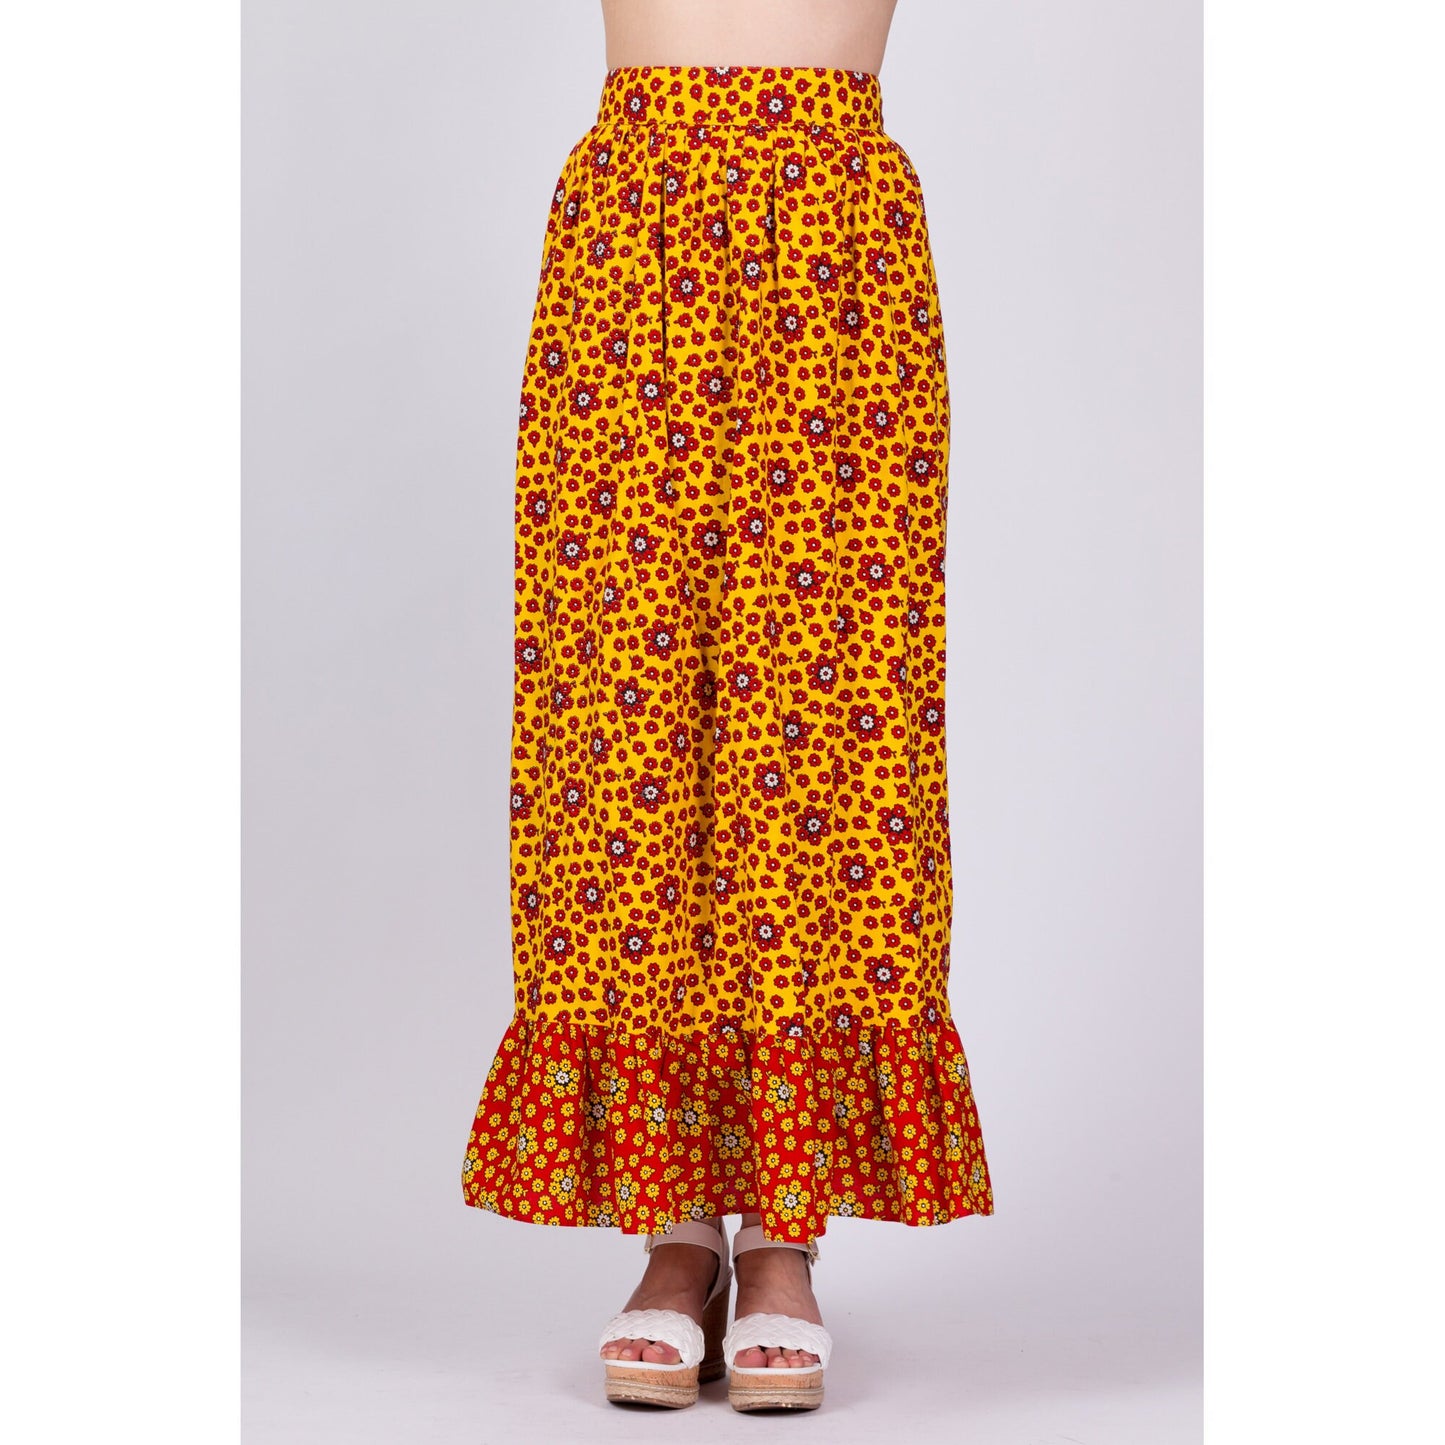 70s Floral Kaleidoscope Print Maxi Skirt - Small, 25.75" 